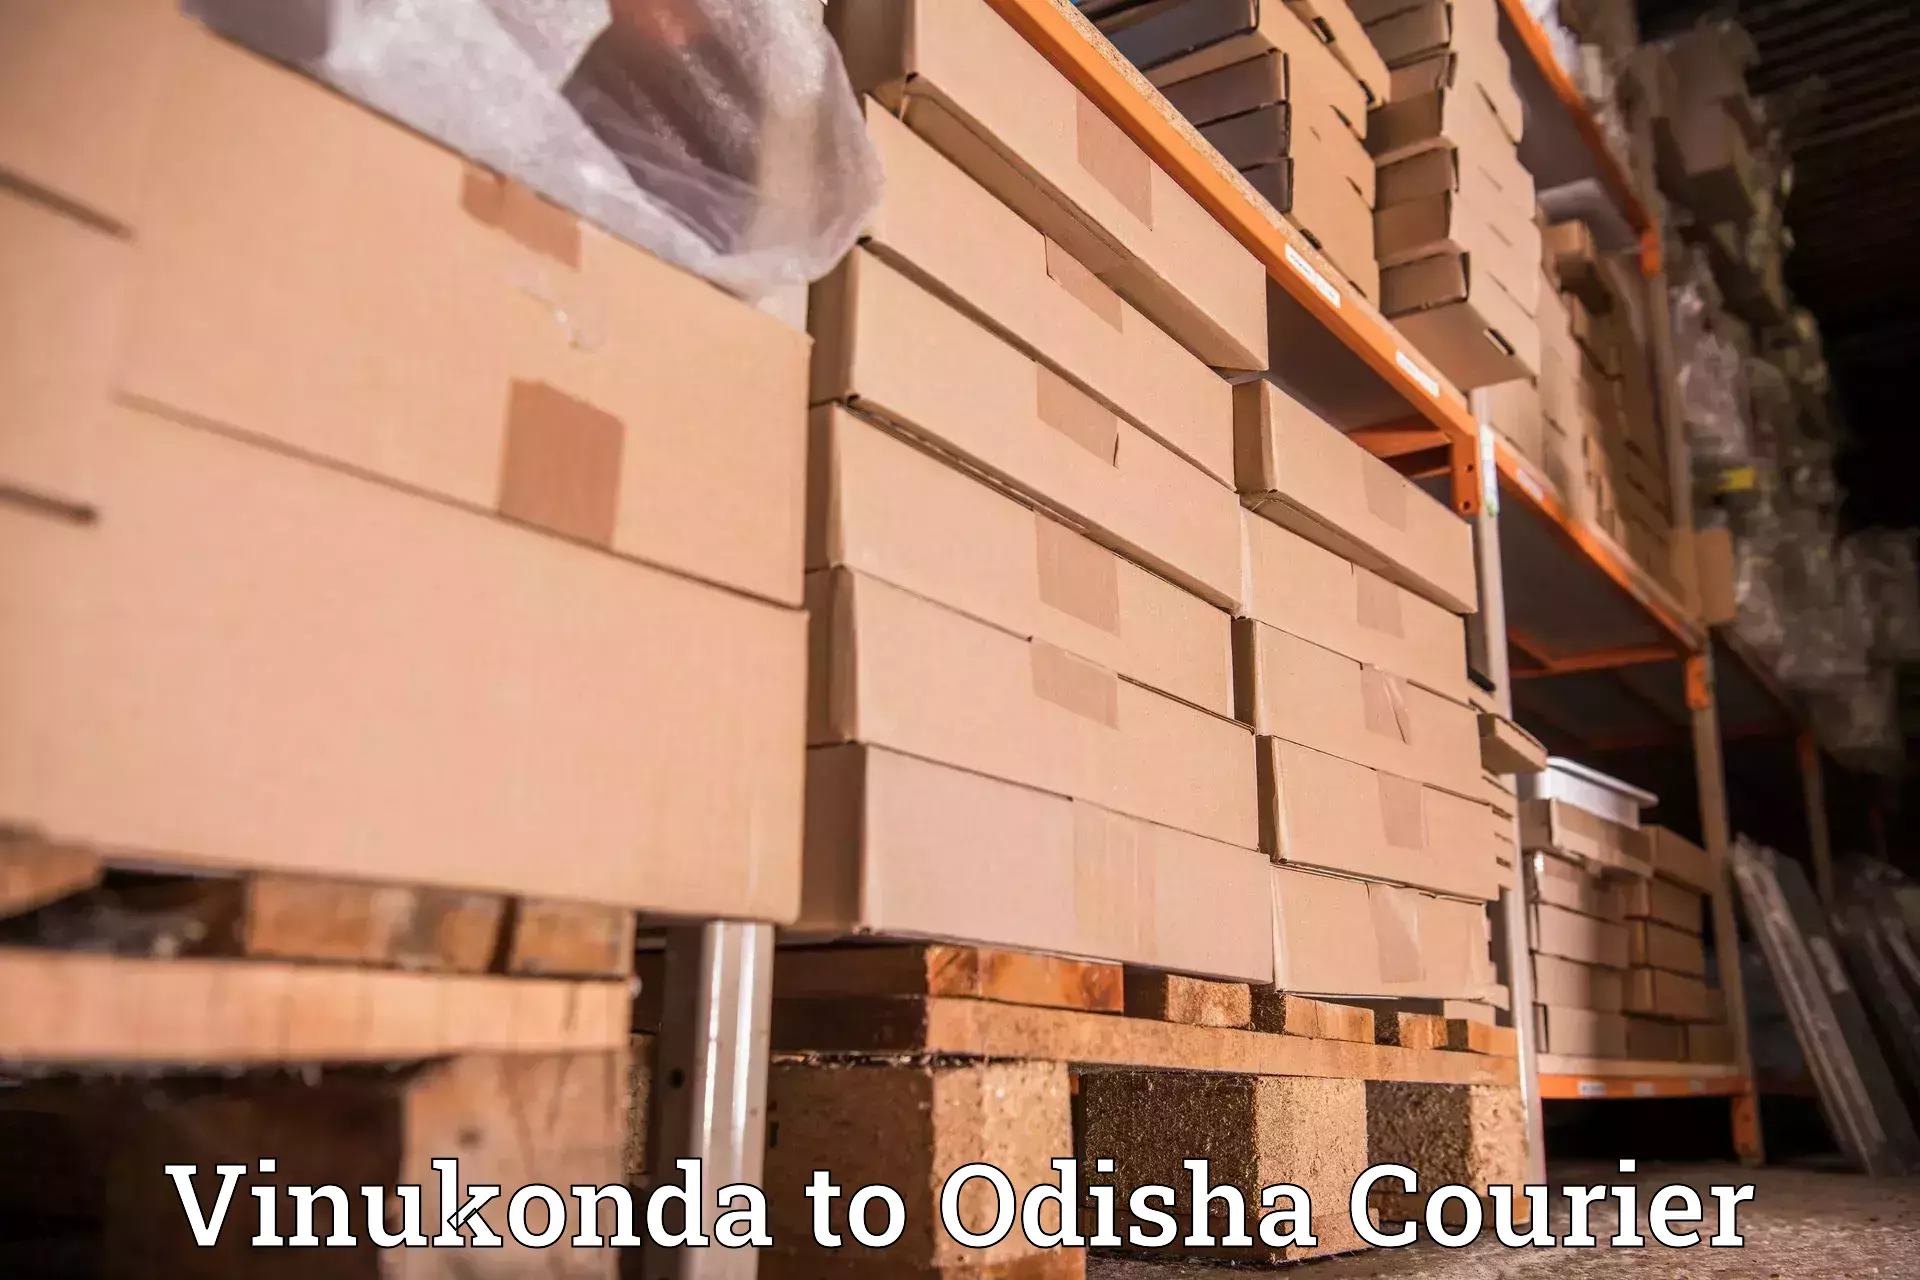 Courier service innovation Vinukonda to Saintala